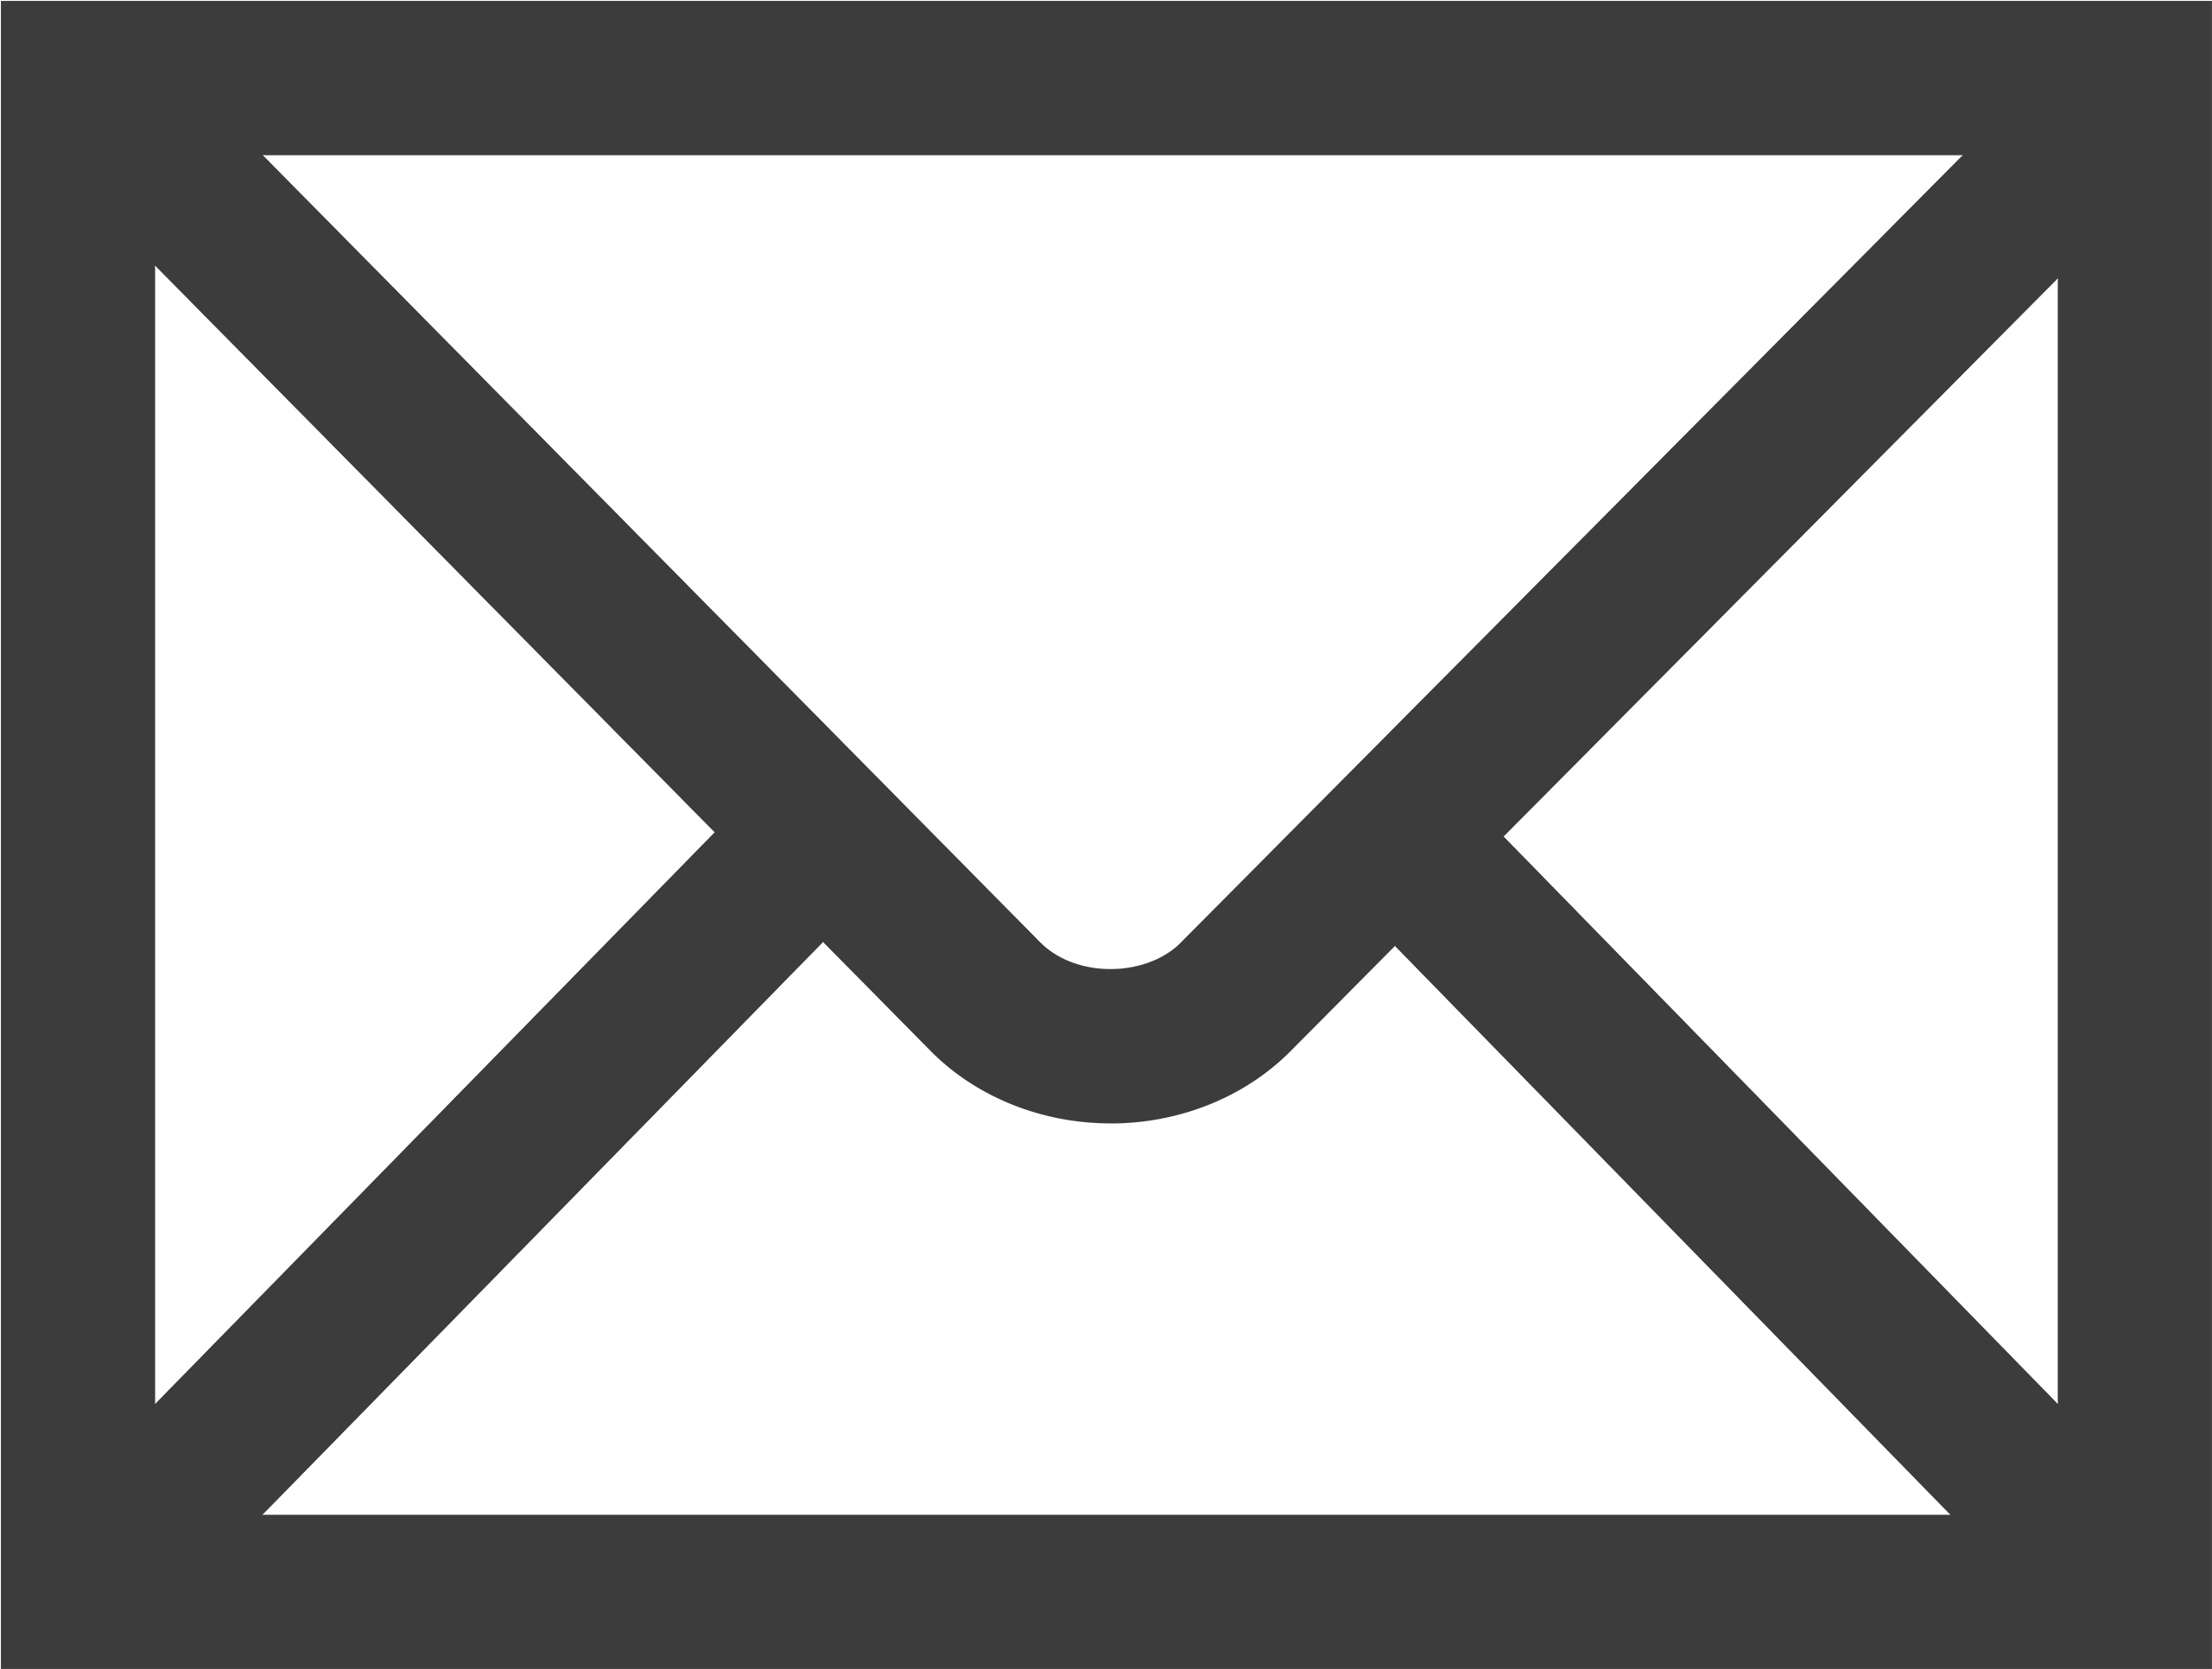 Office@izks-mainz - De - Transparent Background Email Logos (2848x2185)